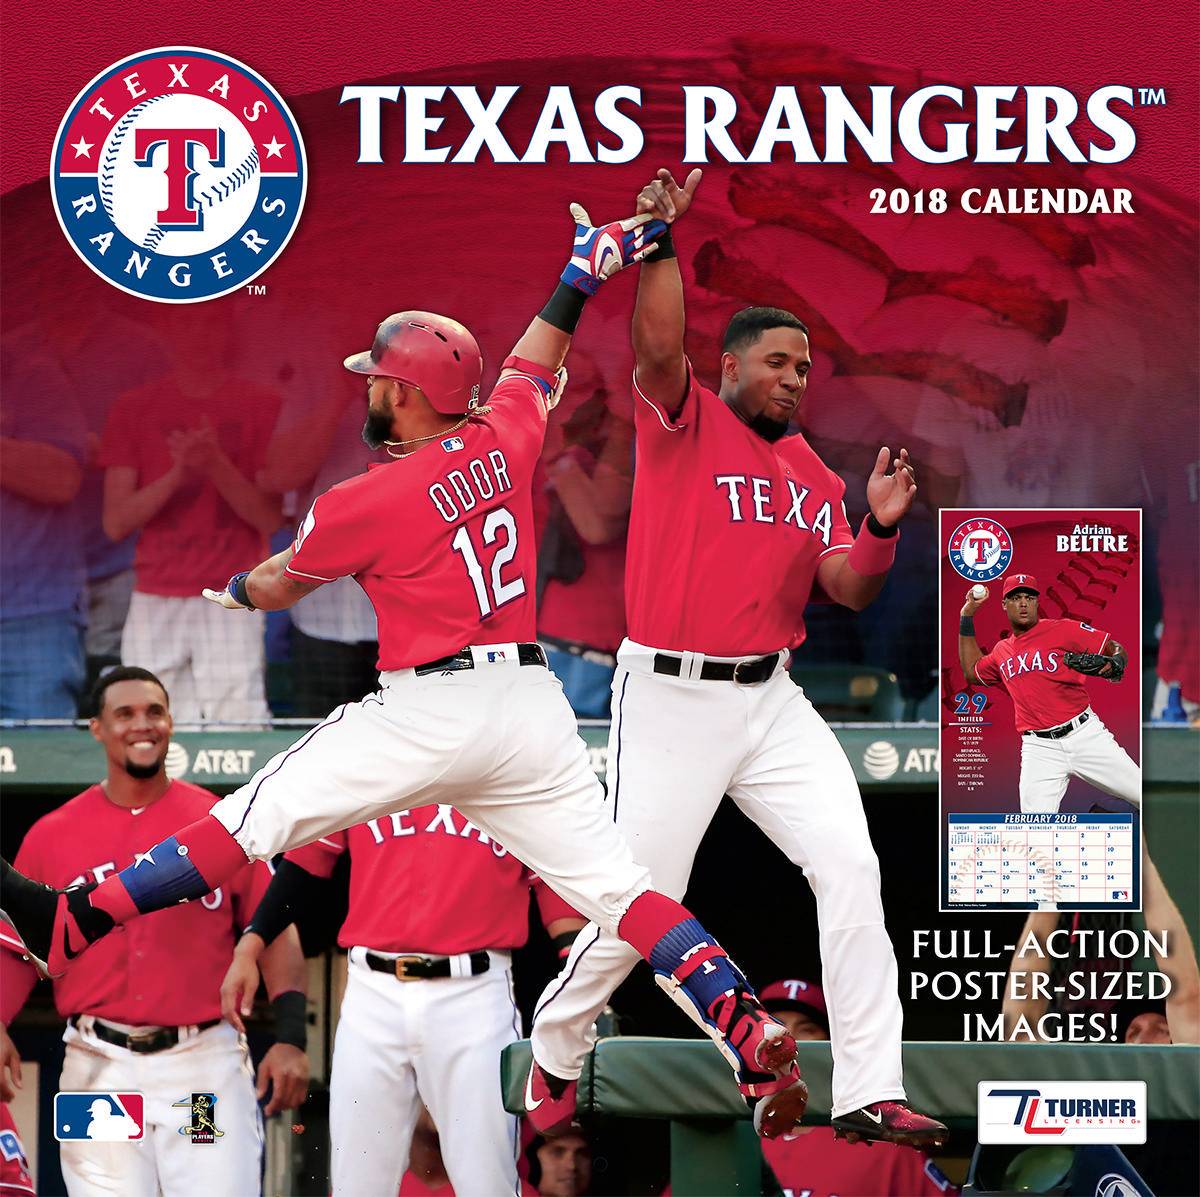 Turner 2018 MLB Texas Rangers Wall Calendar Играландия интернет